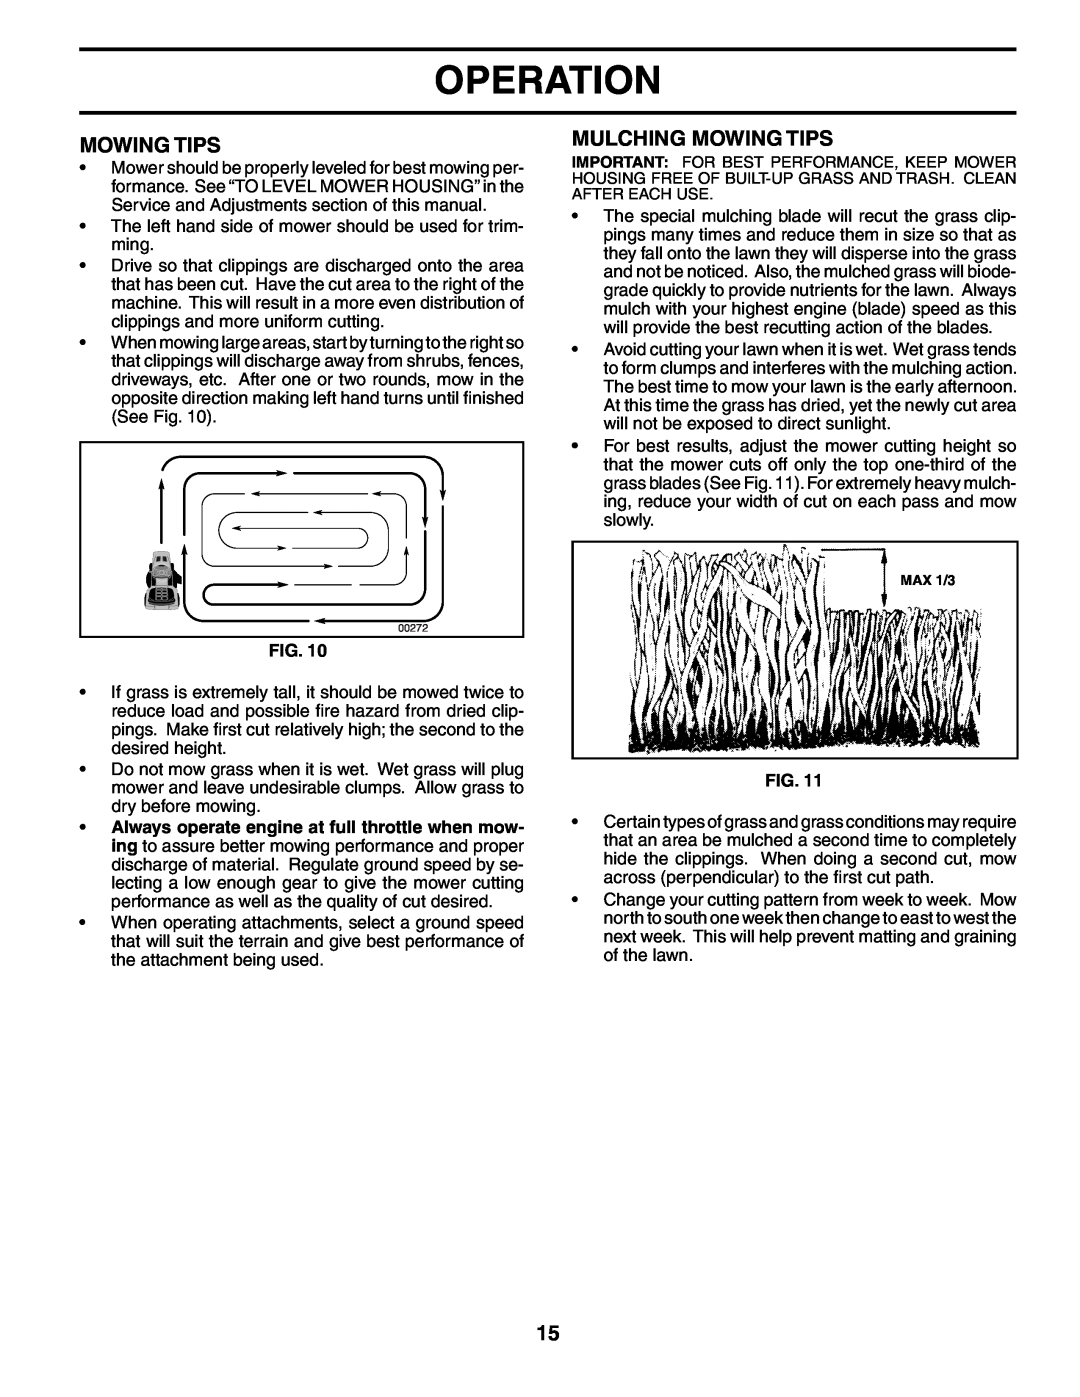 Poulan PD24PH48ST manual Mulching Mowing Tips, Operation 